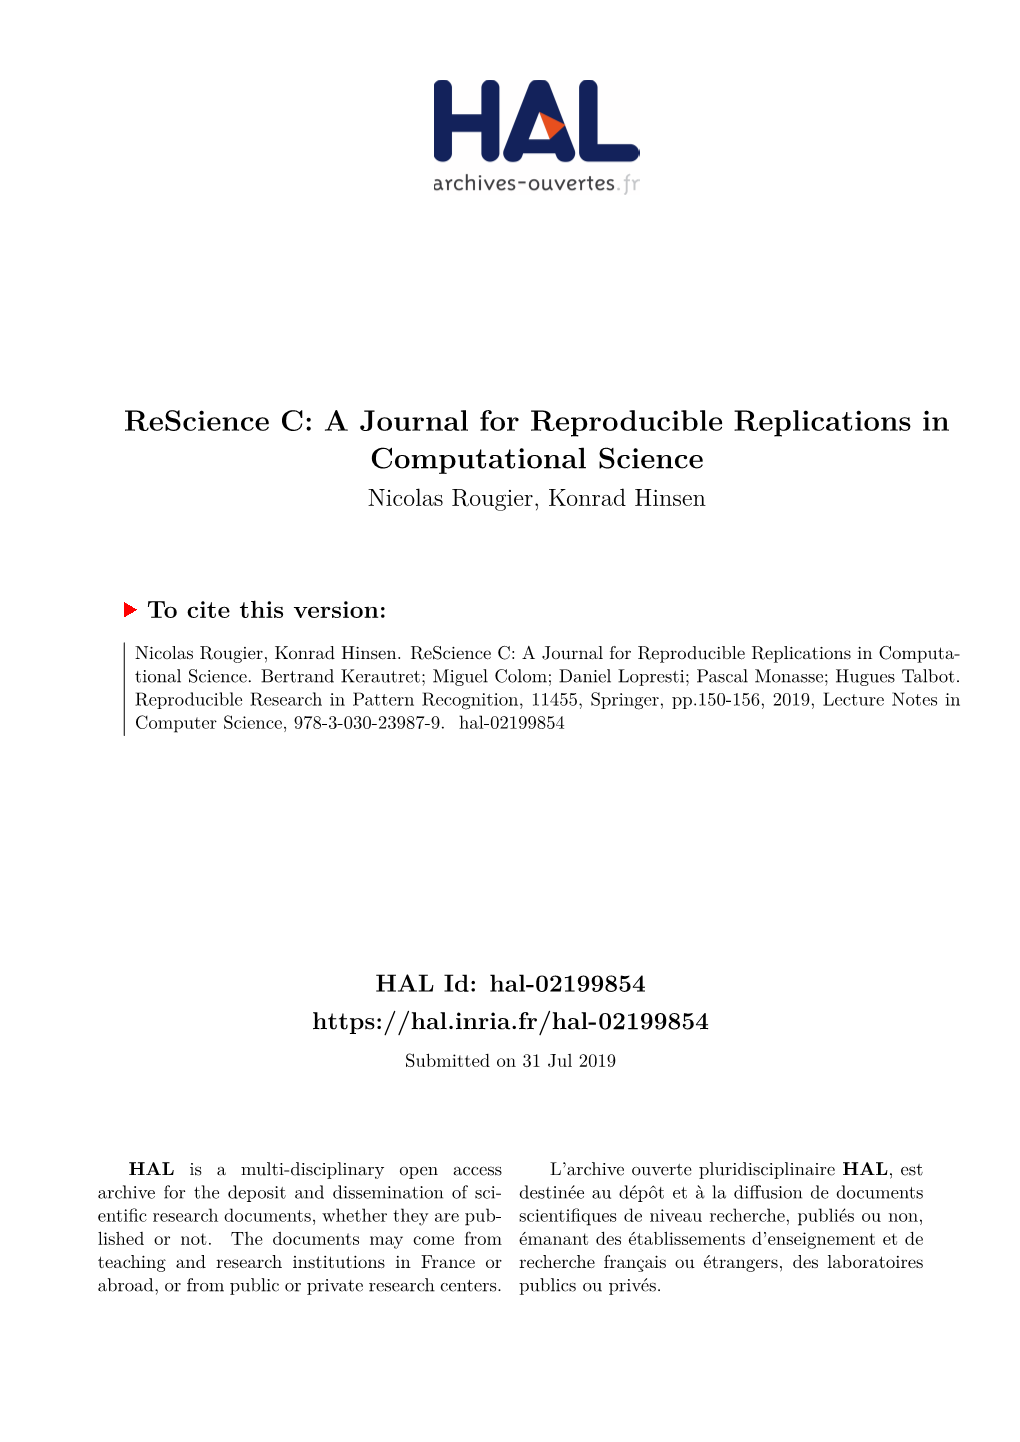 Rescience C: a Journal for Reproducible Replications in Computational Science Nicolas Rougier, Konrad Hinsen